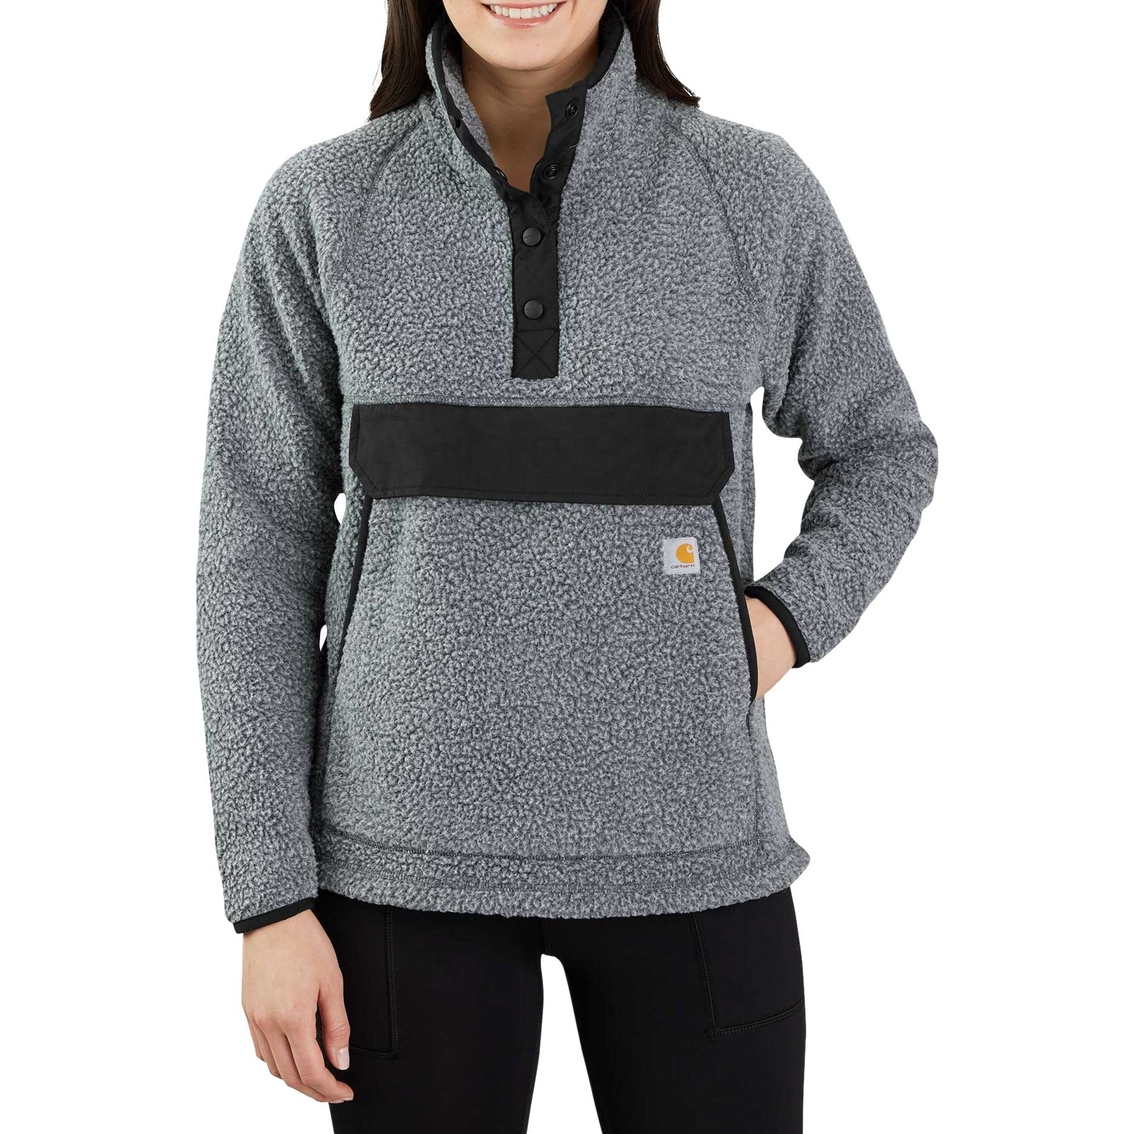 Carhartt Relaxed Fit Fleece Pullover Sweatshirt | Tops | Clothing ...